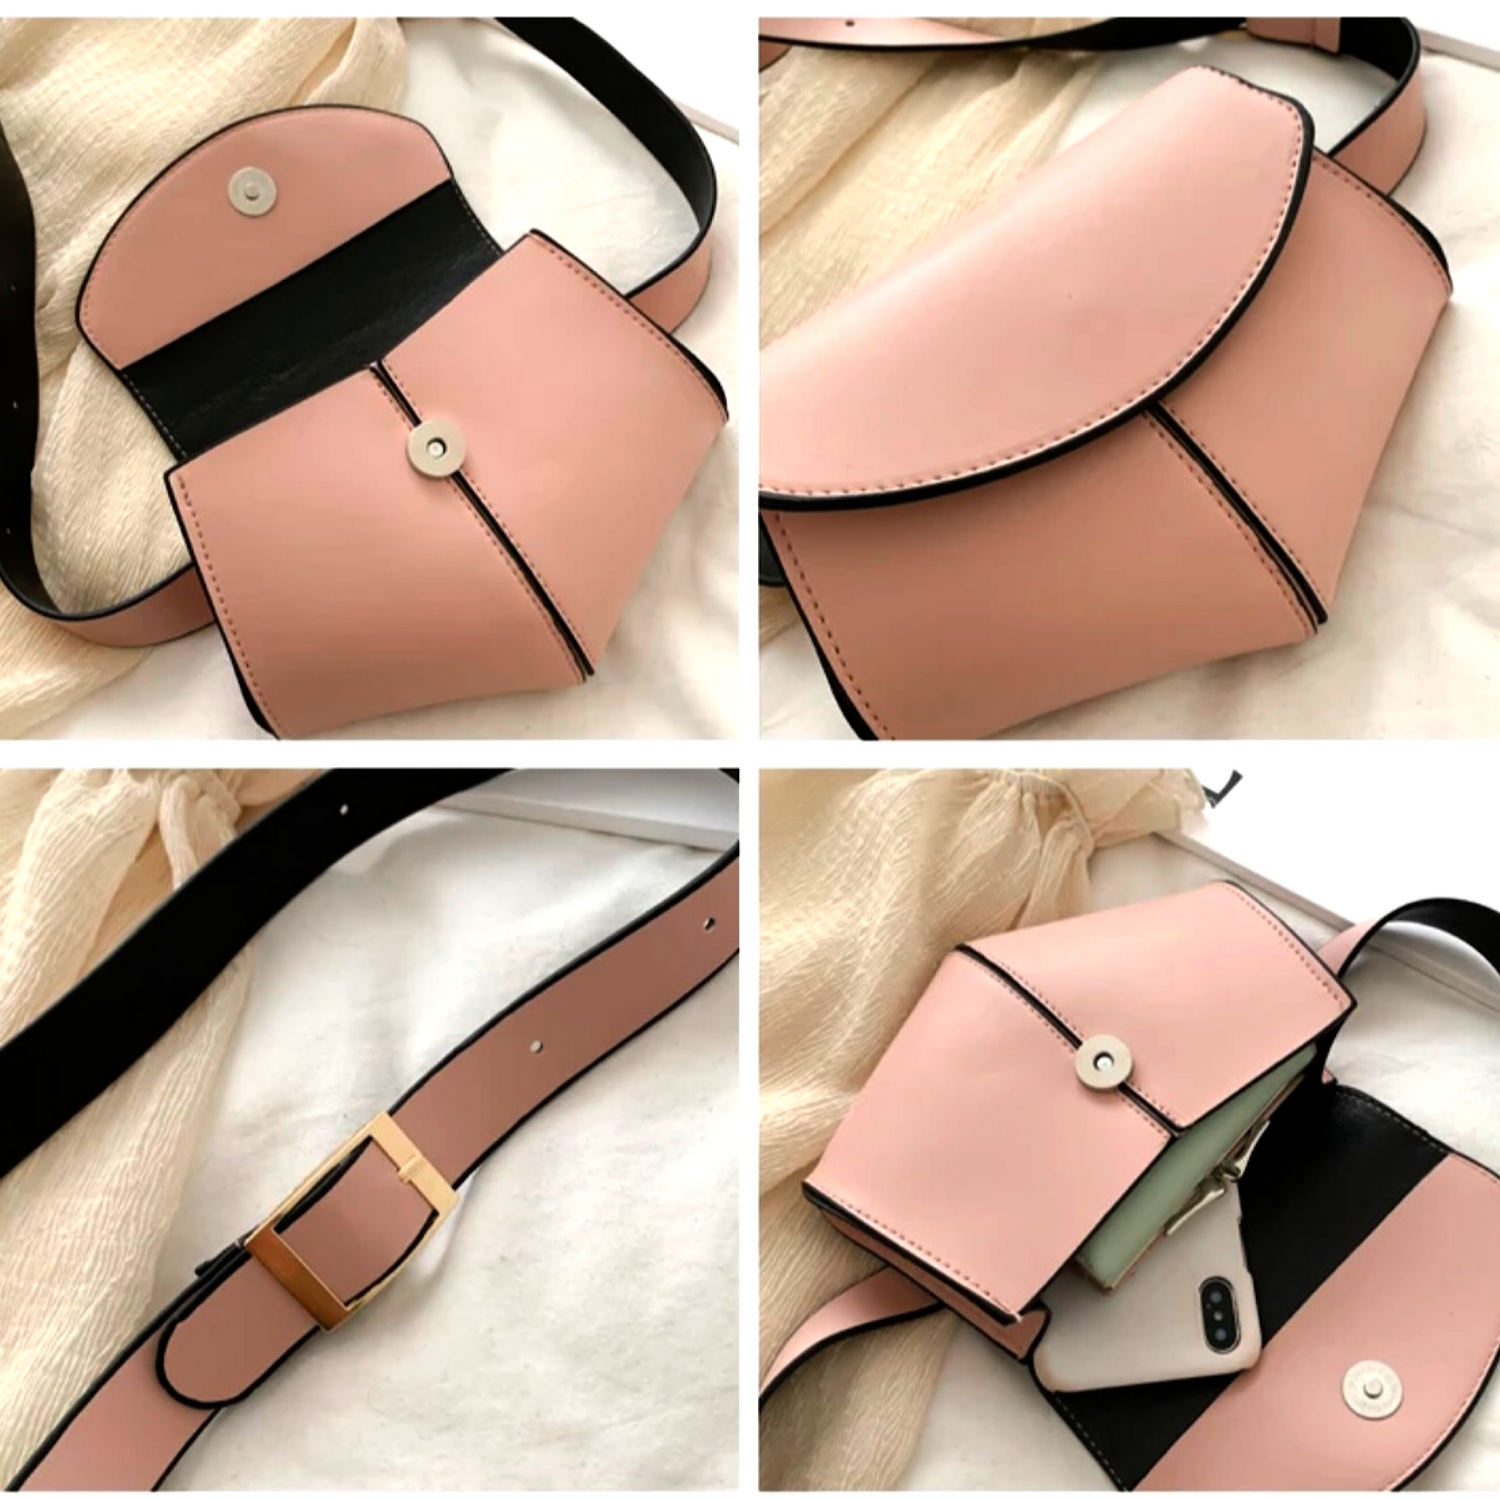 Personalized Belt Bag